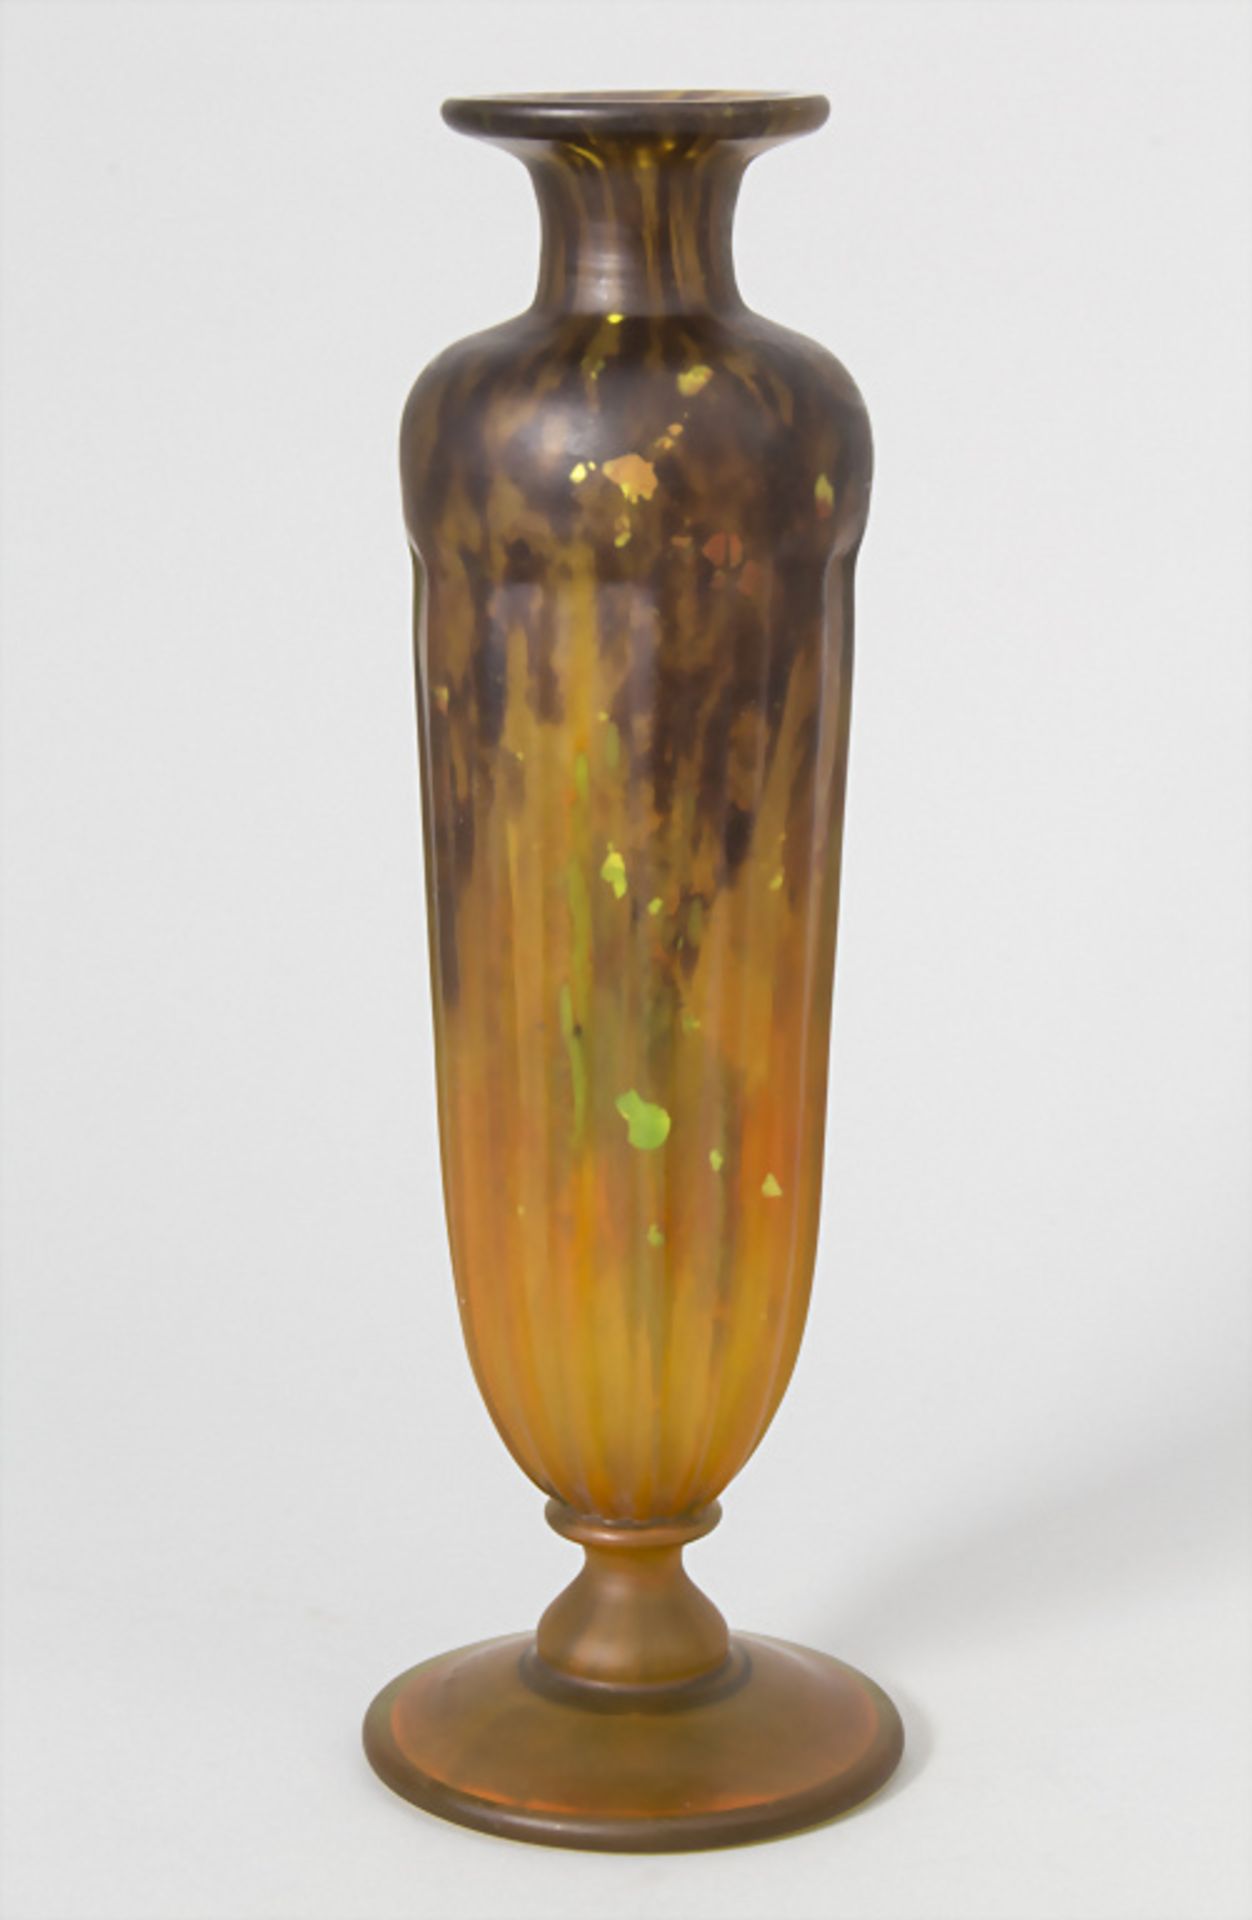 Jugendstil Vase / Art Nouveau glass vase, Daum Frères, Ecole de Nancy, Frankreich, um 1900